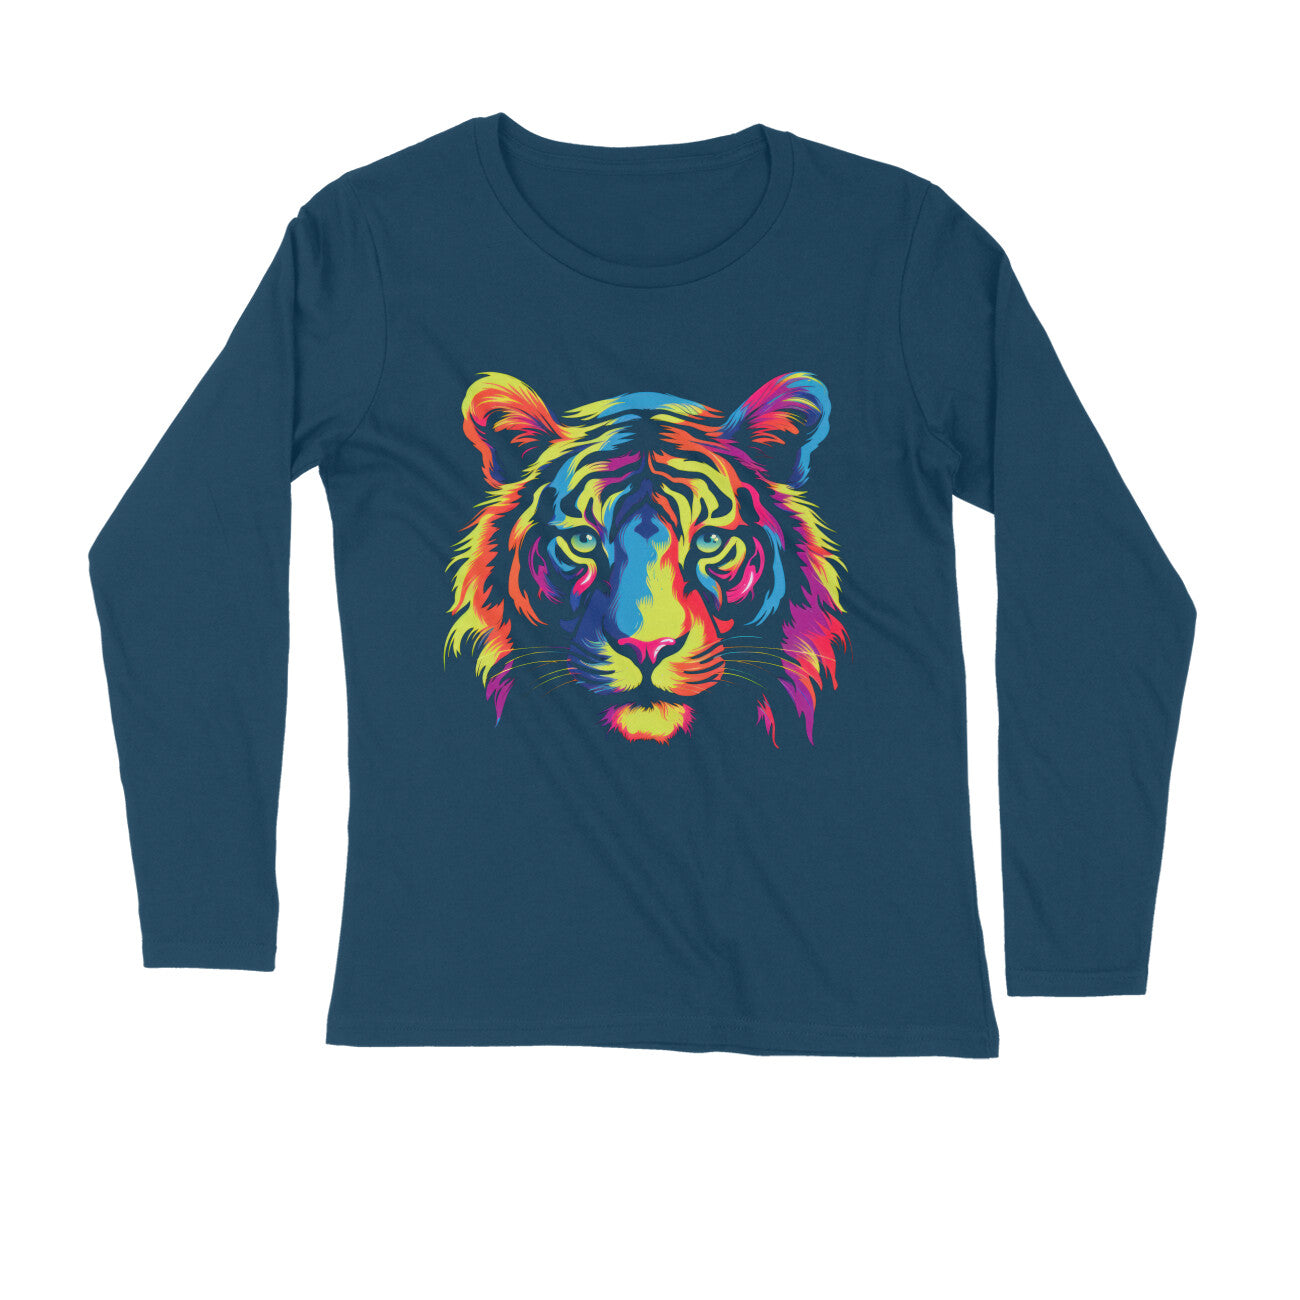 Men's Full Sleeve Round Neck Rainbow Tiger T-Shirt